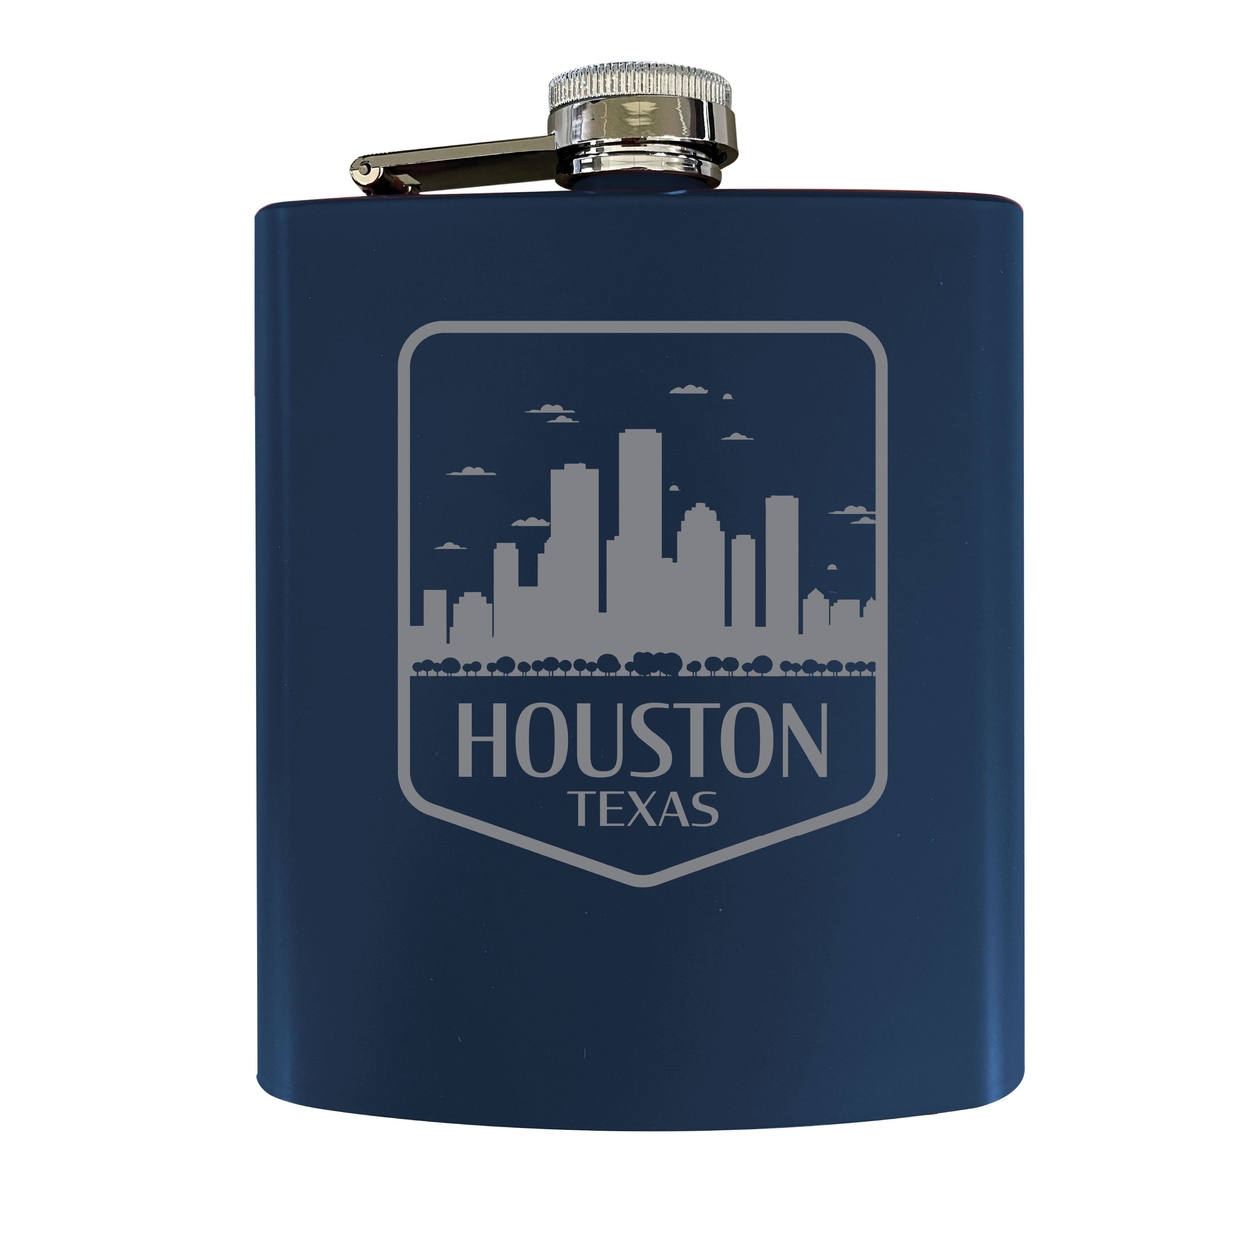 Houston Texas Souvenir 7 Oz Engraved Steel Flask Matte Finish - Red,,2-Pack